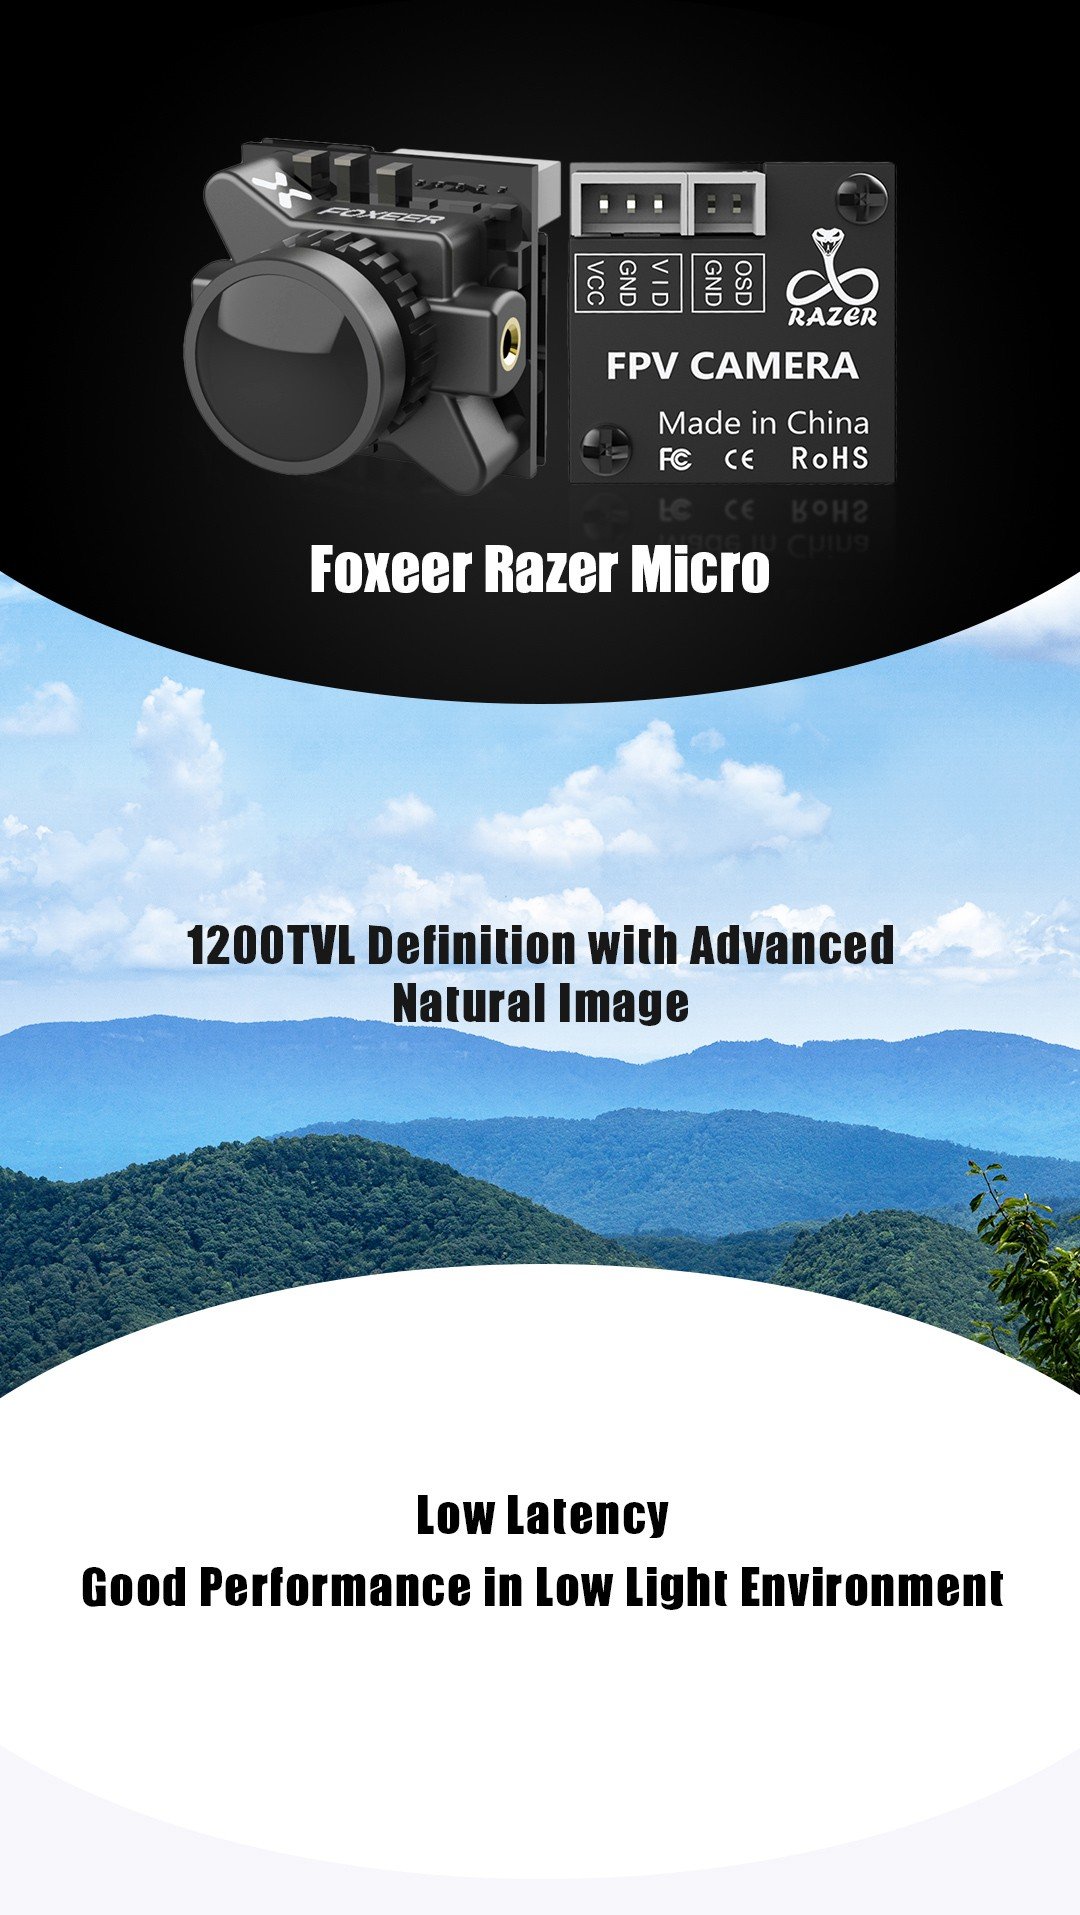 Foxeer Razer Micro 1200TVL 4:3 PAL/NSTC CMOS FPV Camera (1.8mm) - Black 9 - Foxeer